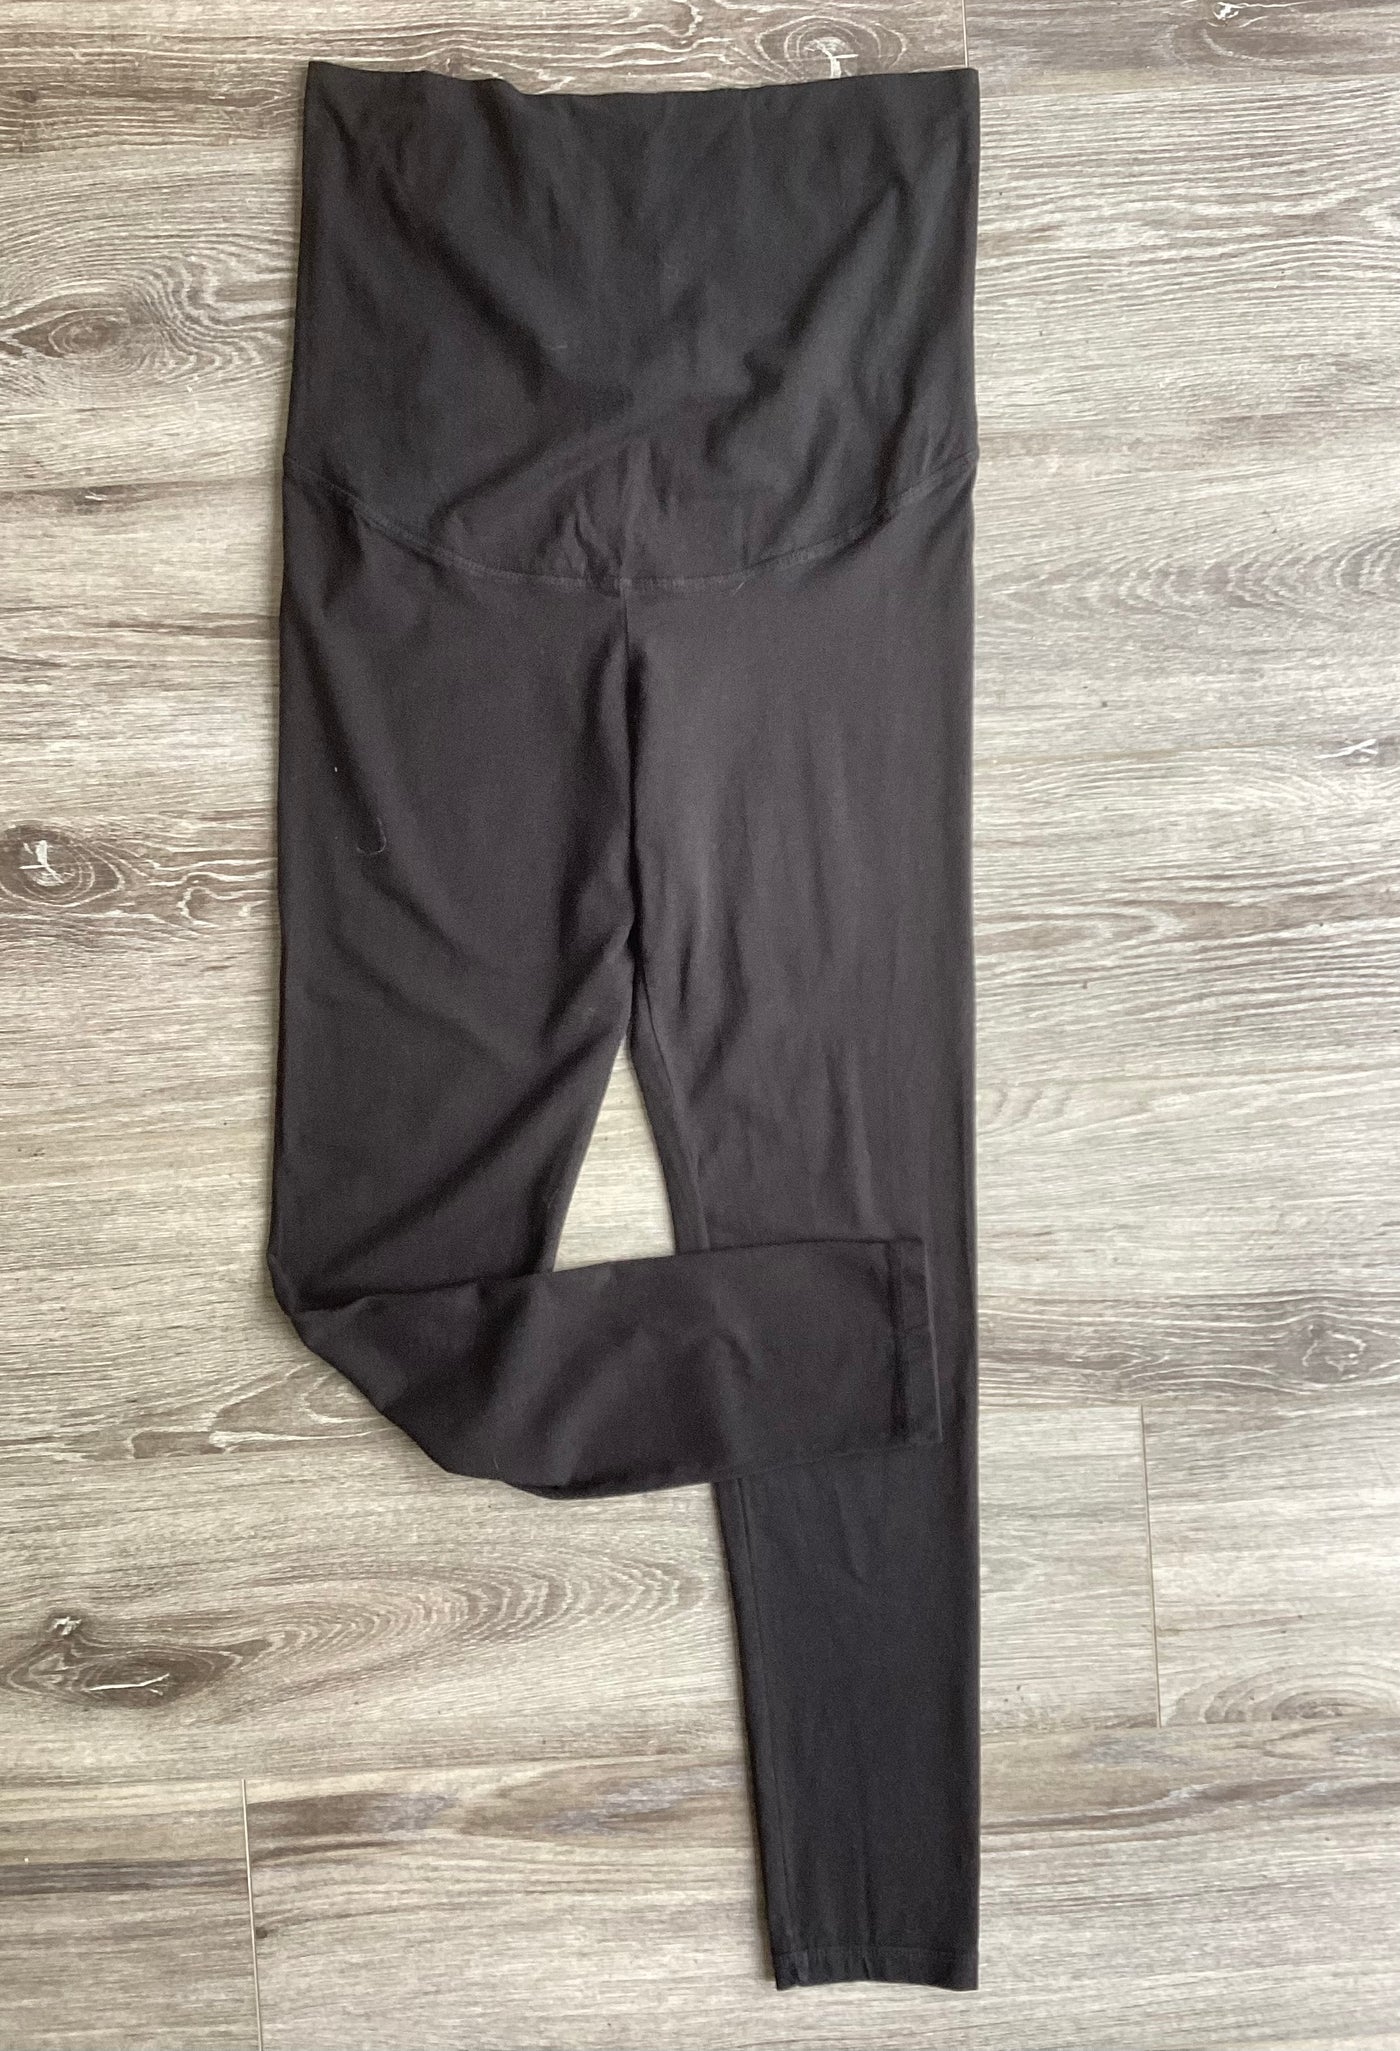 H&M Mama black overbump leggings - Size M (Approx UK 10/12)